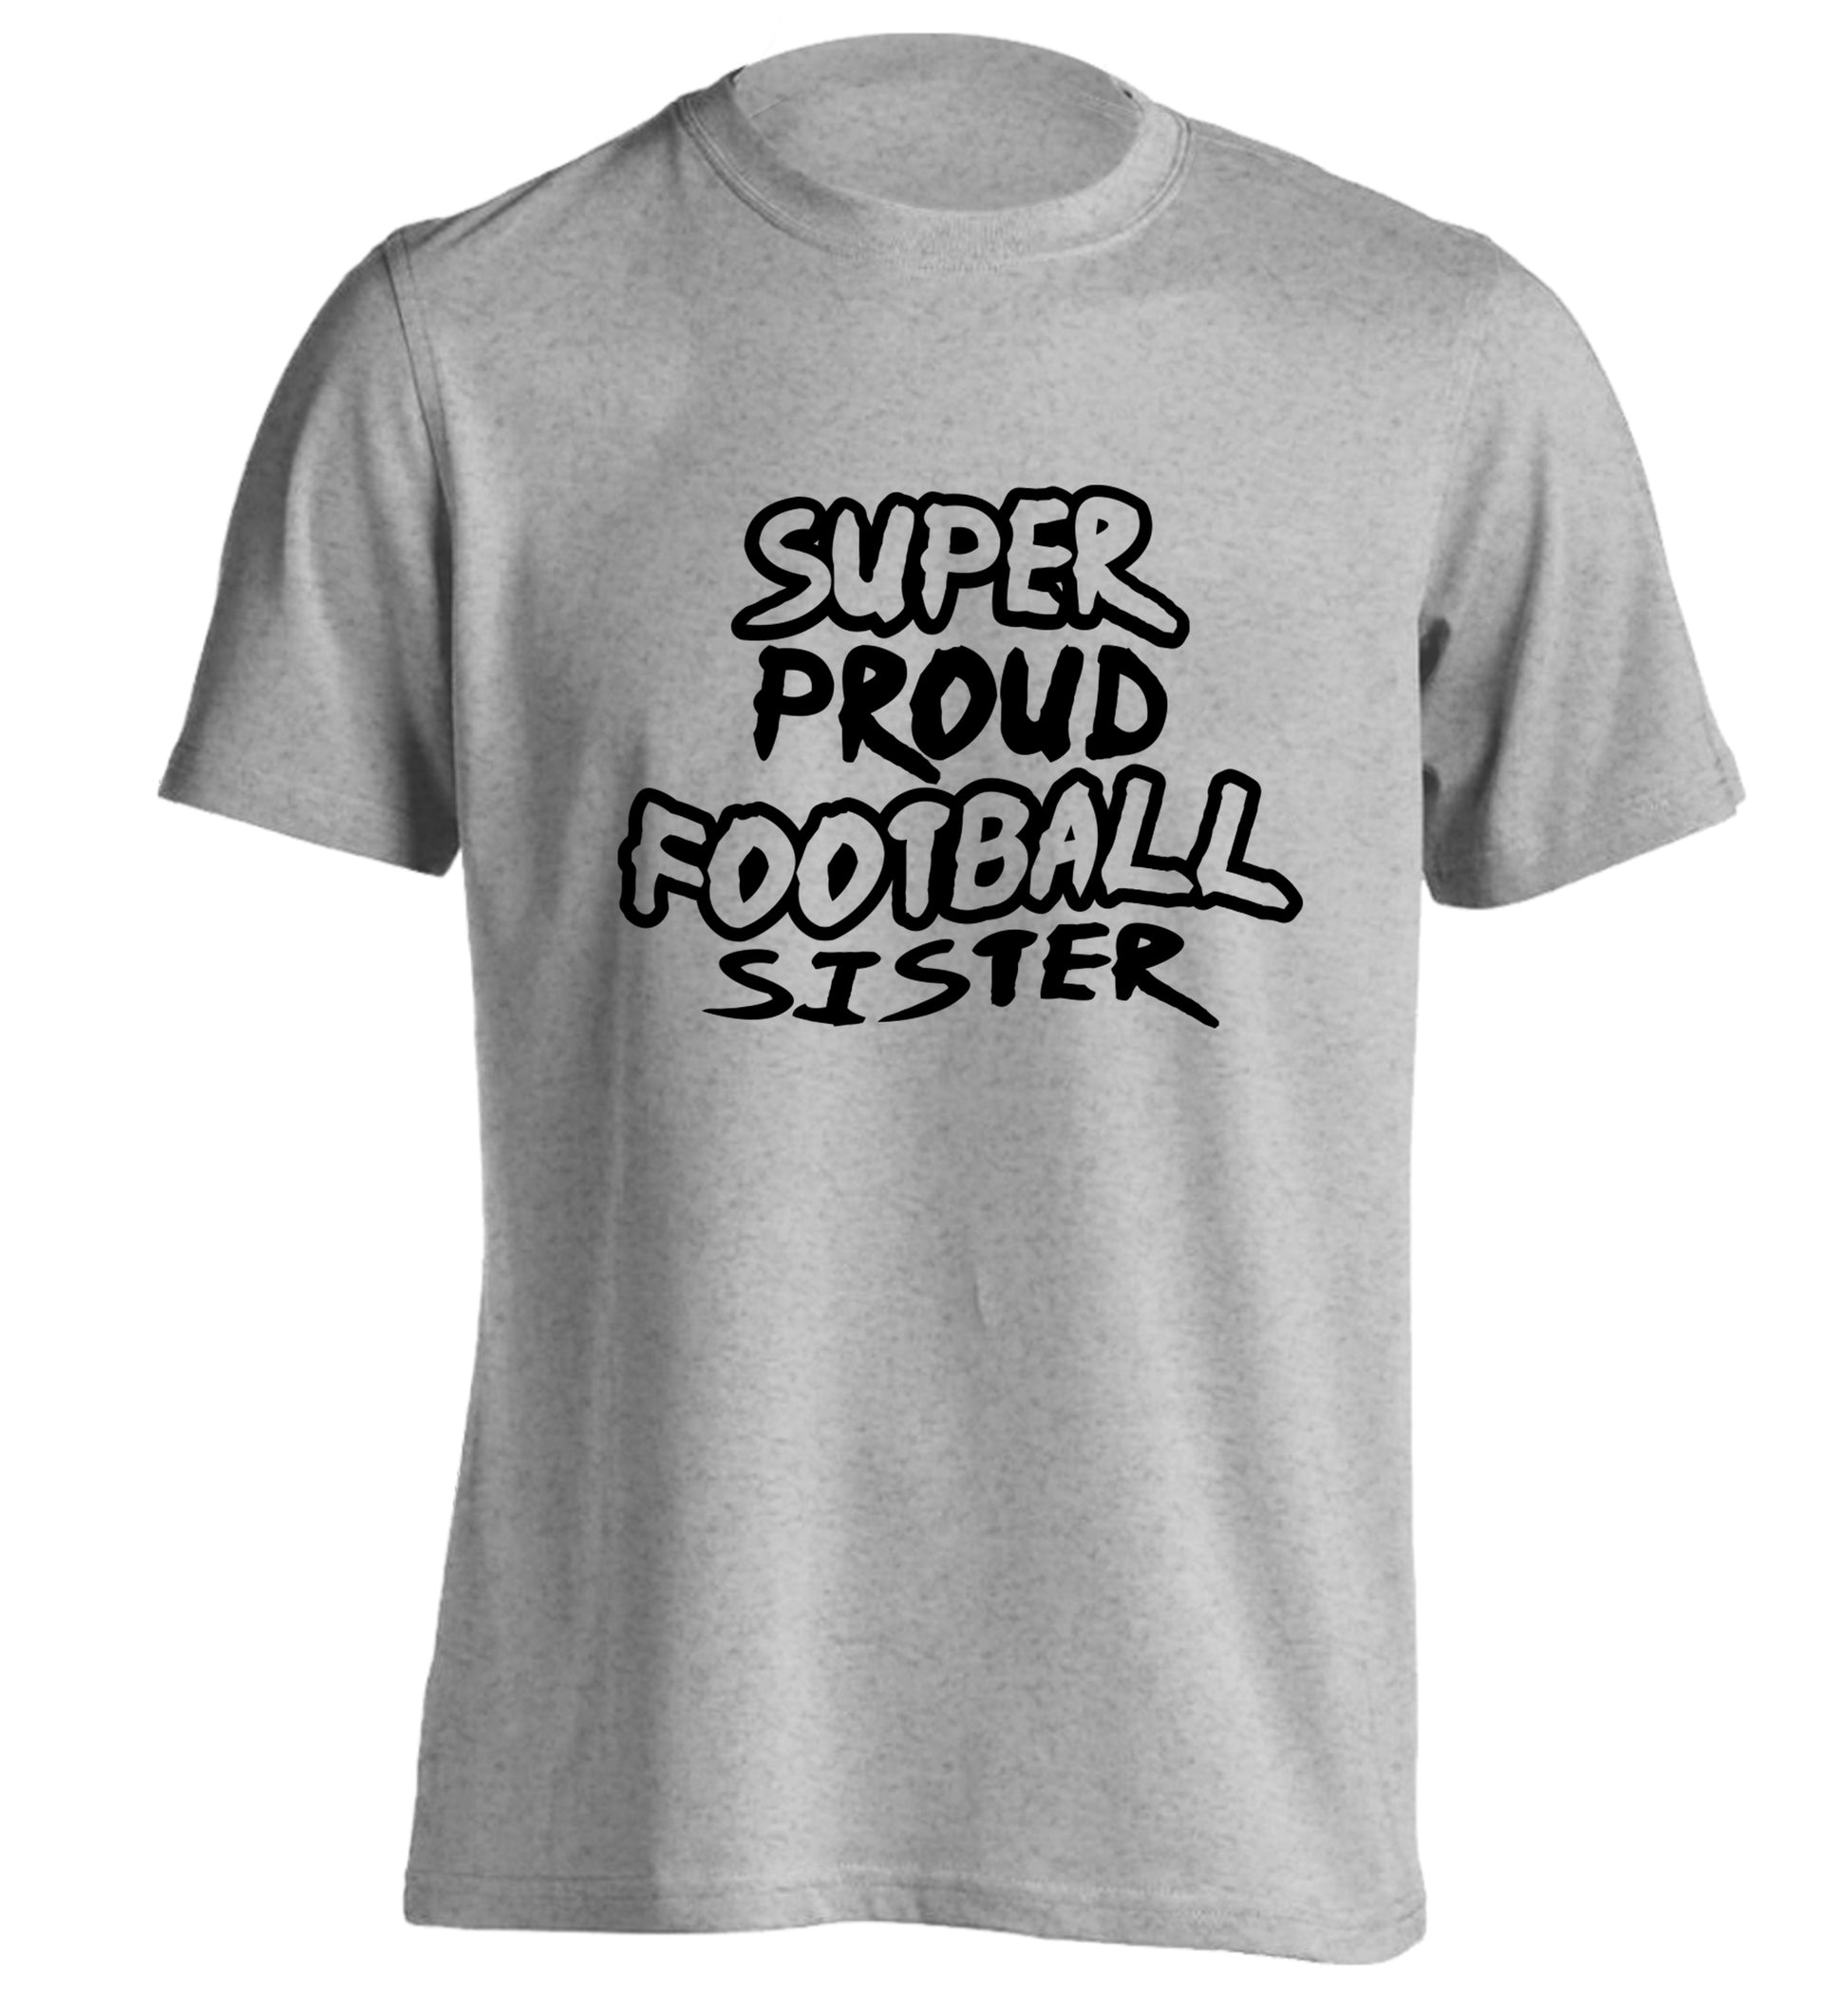 Super proud football sister adults unisexgrey Tshirt 2XL